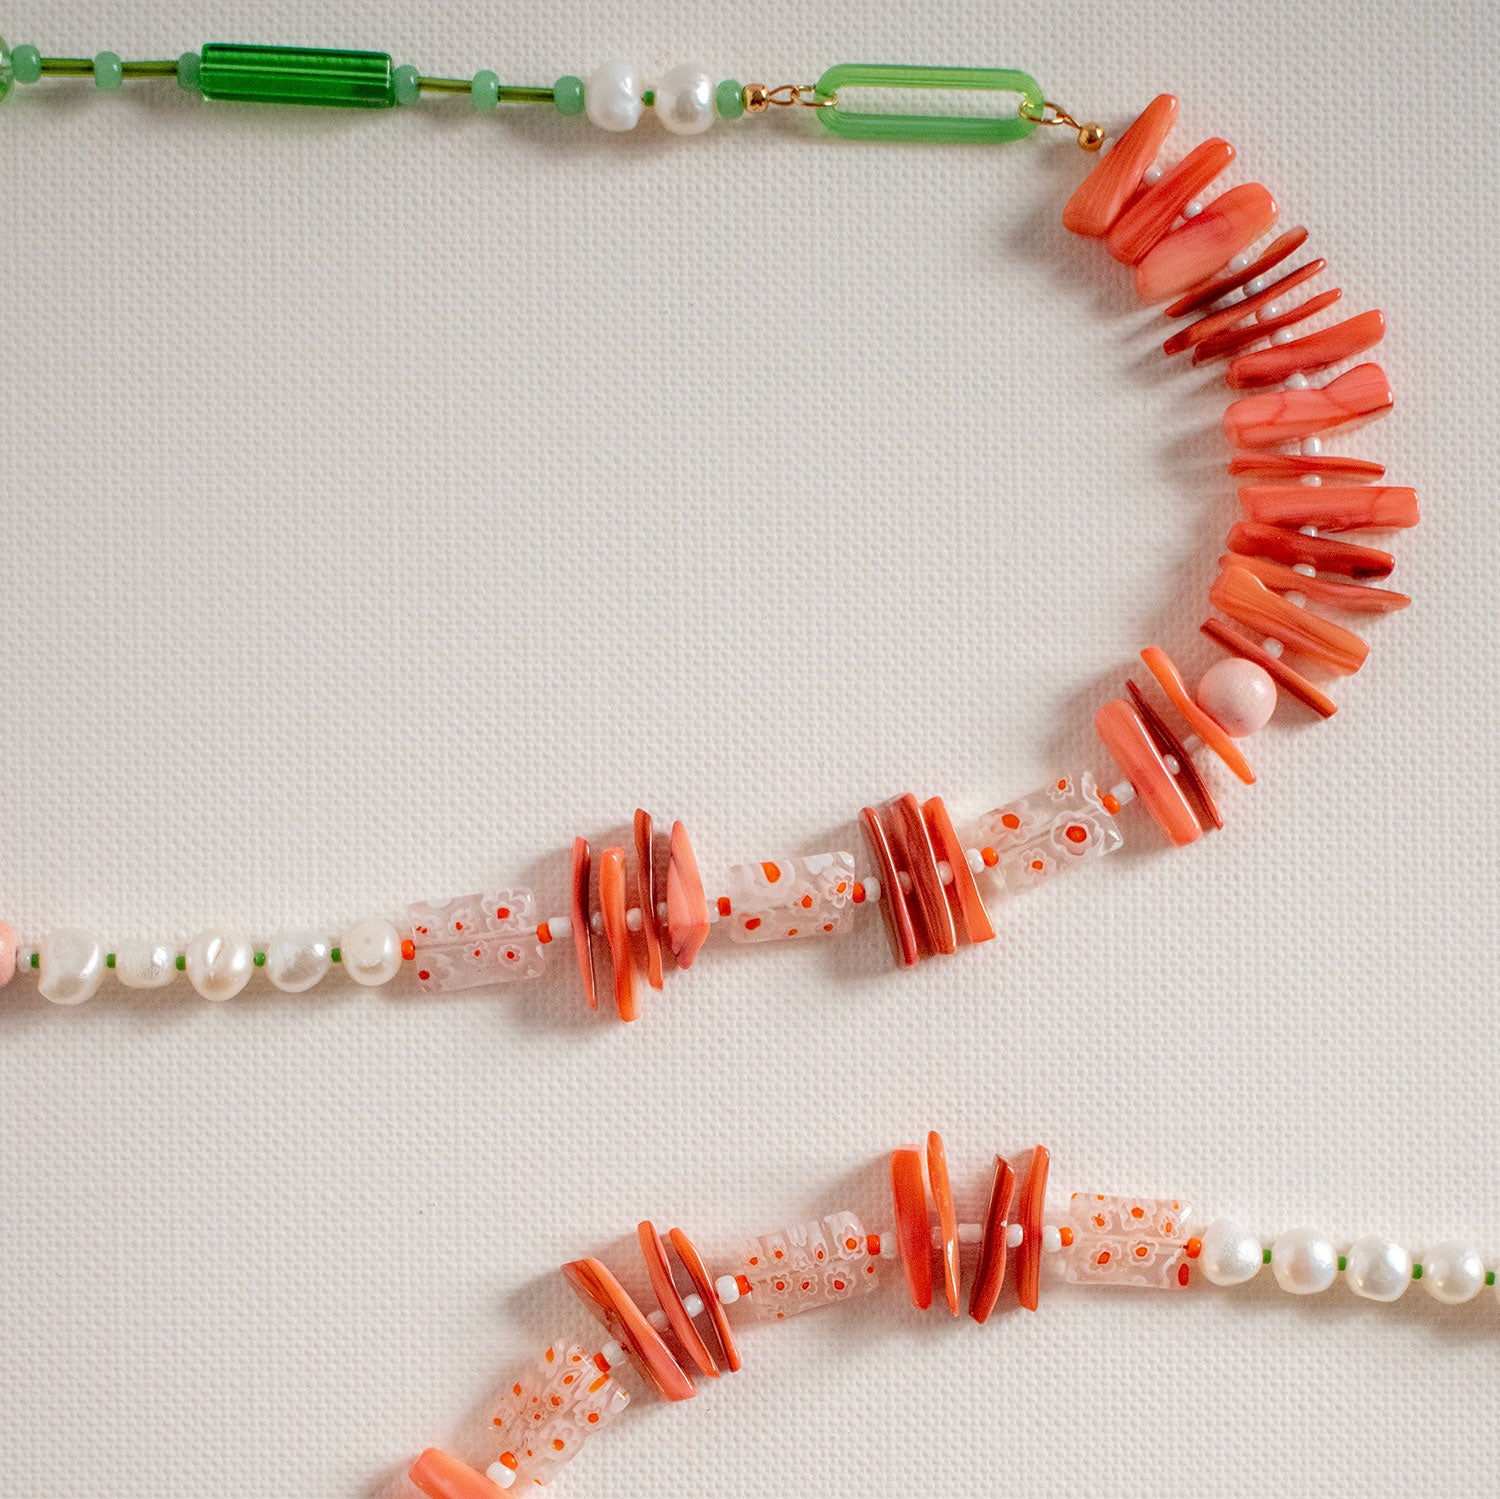 Firenze Coral & Green Millefiori Long Necklace